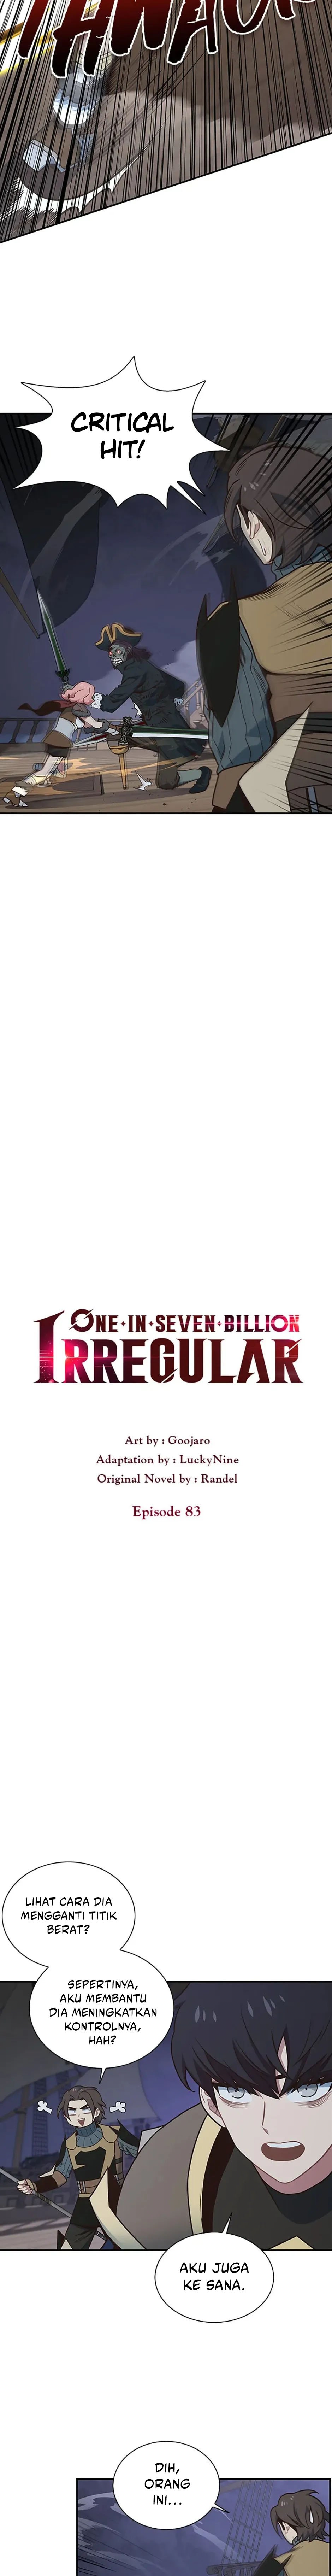 Irregular Of 1 In 7 Billion (One In Seven Billion Irregular) Chapter 83 - 115